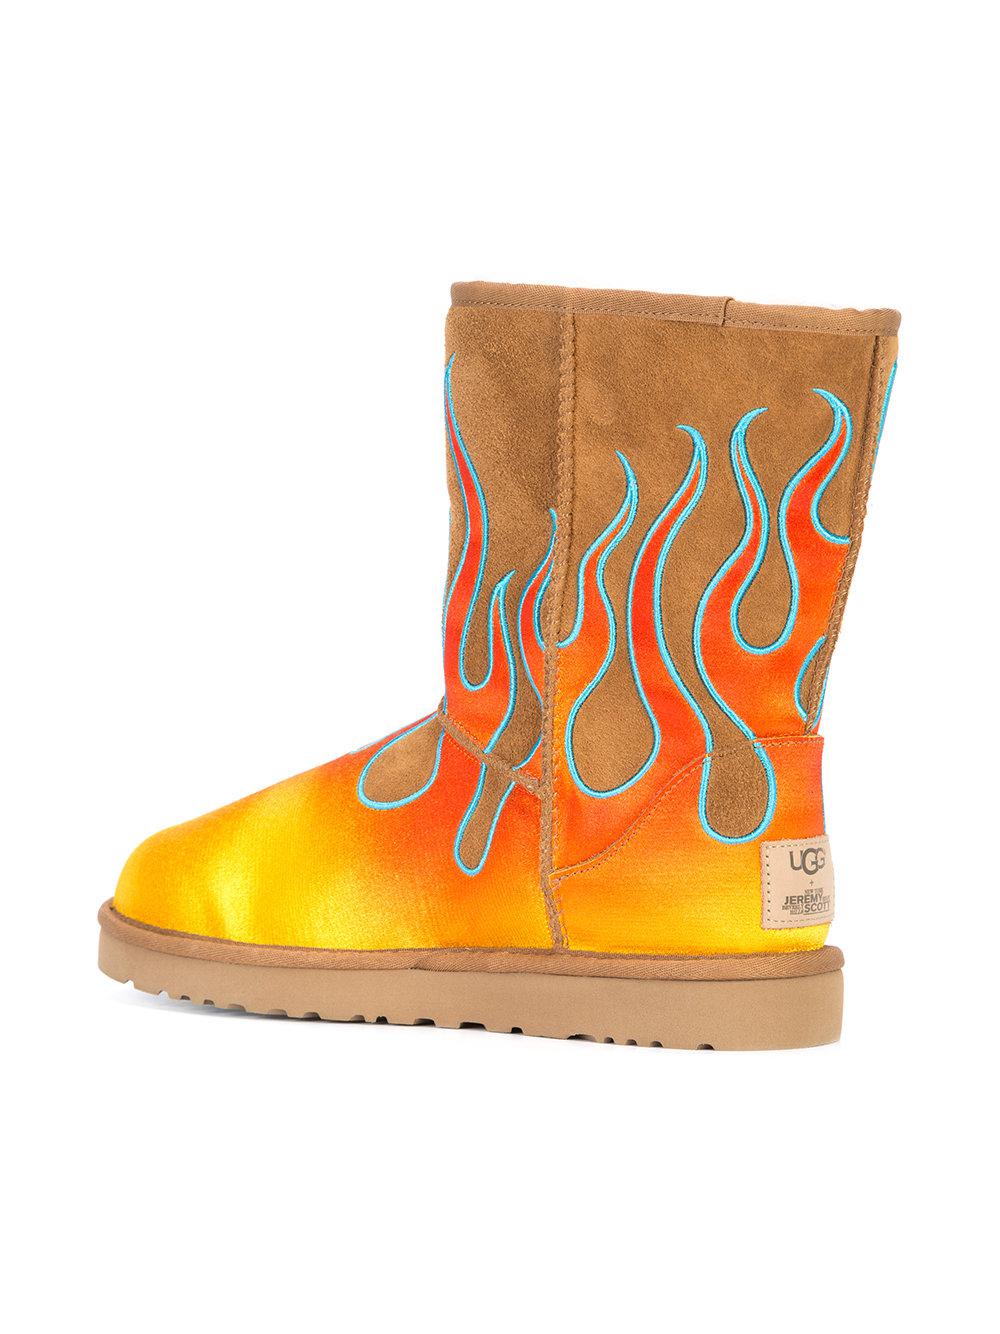 Jeremy Scott Suede Ugg X Classic Short Flames Boots in Yellow & Orange  (Orange) | Lyst